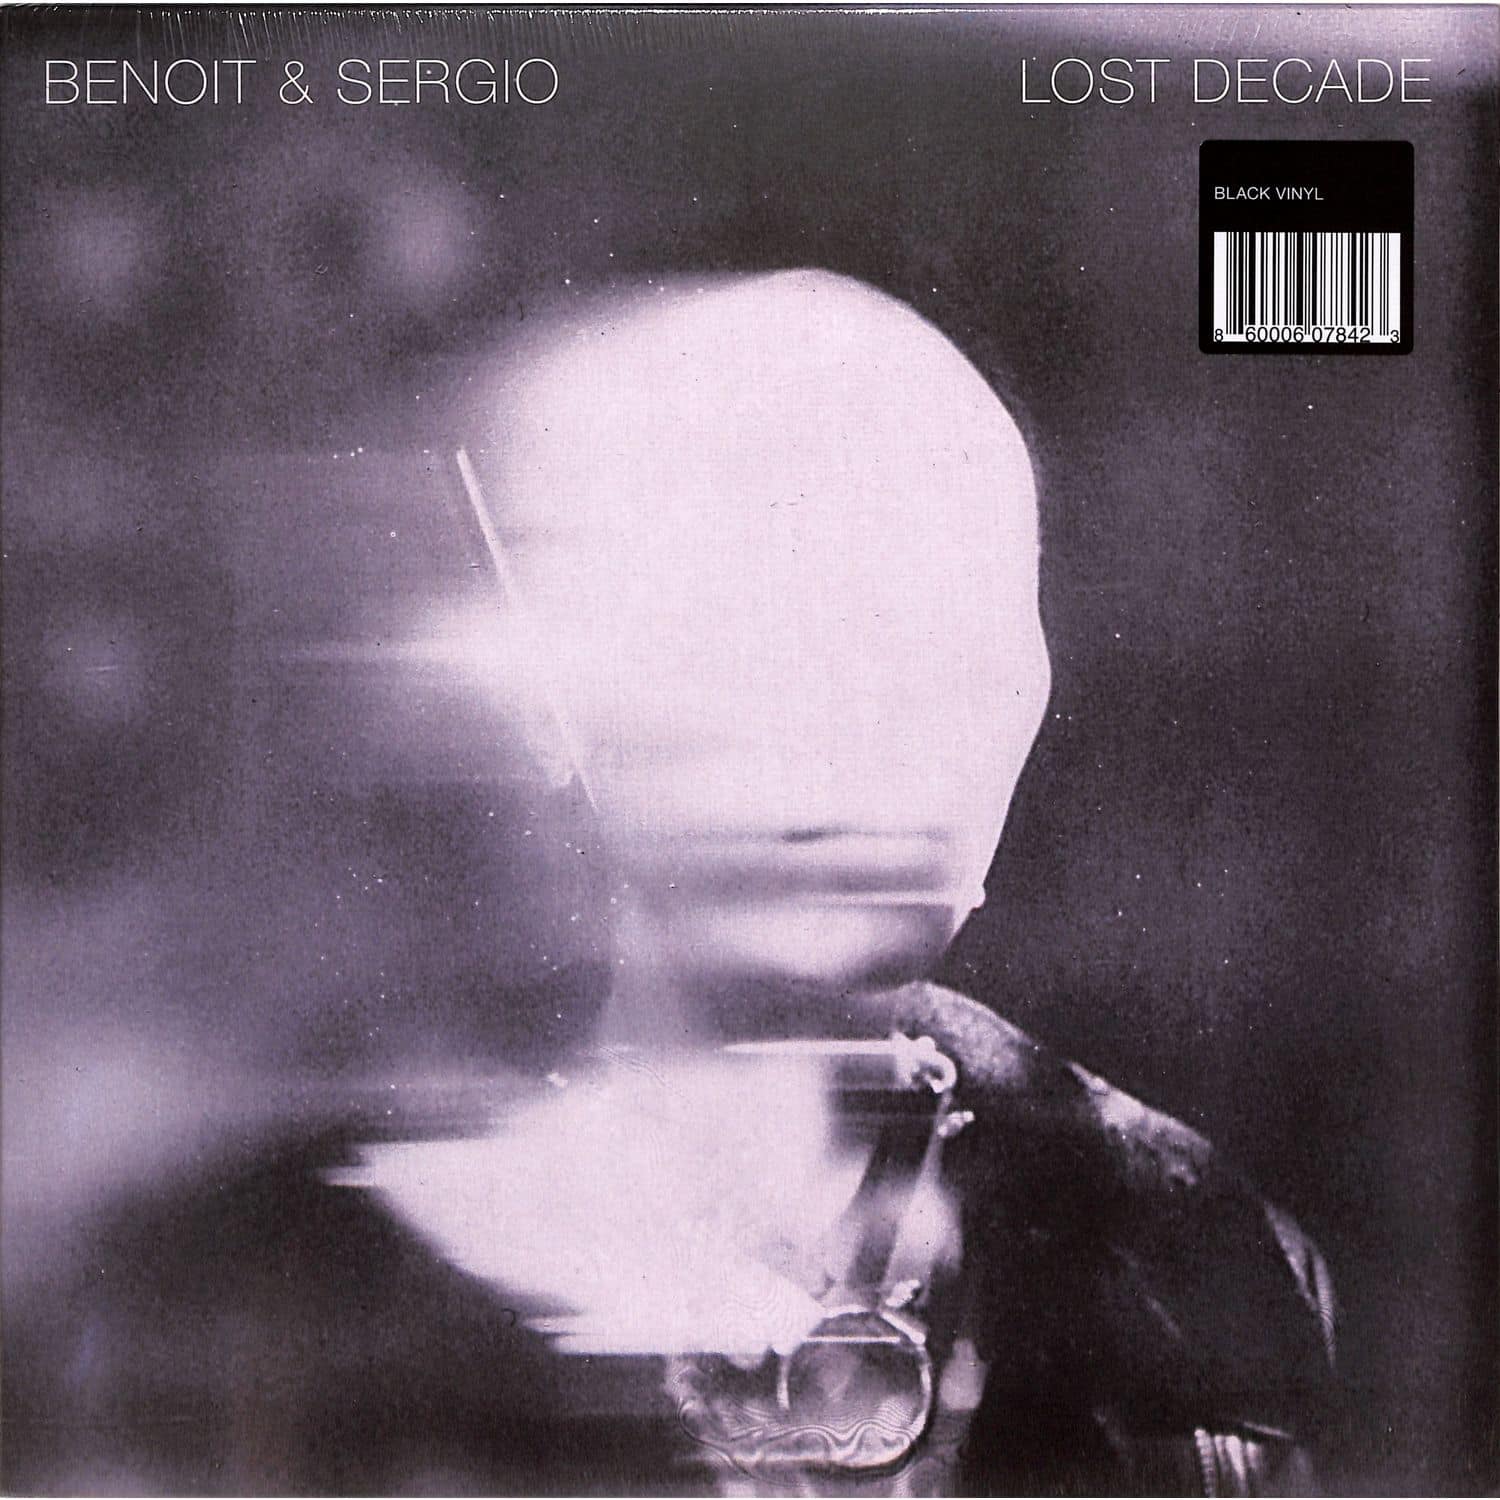 Benoit & Sergio - LOST DECADE 